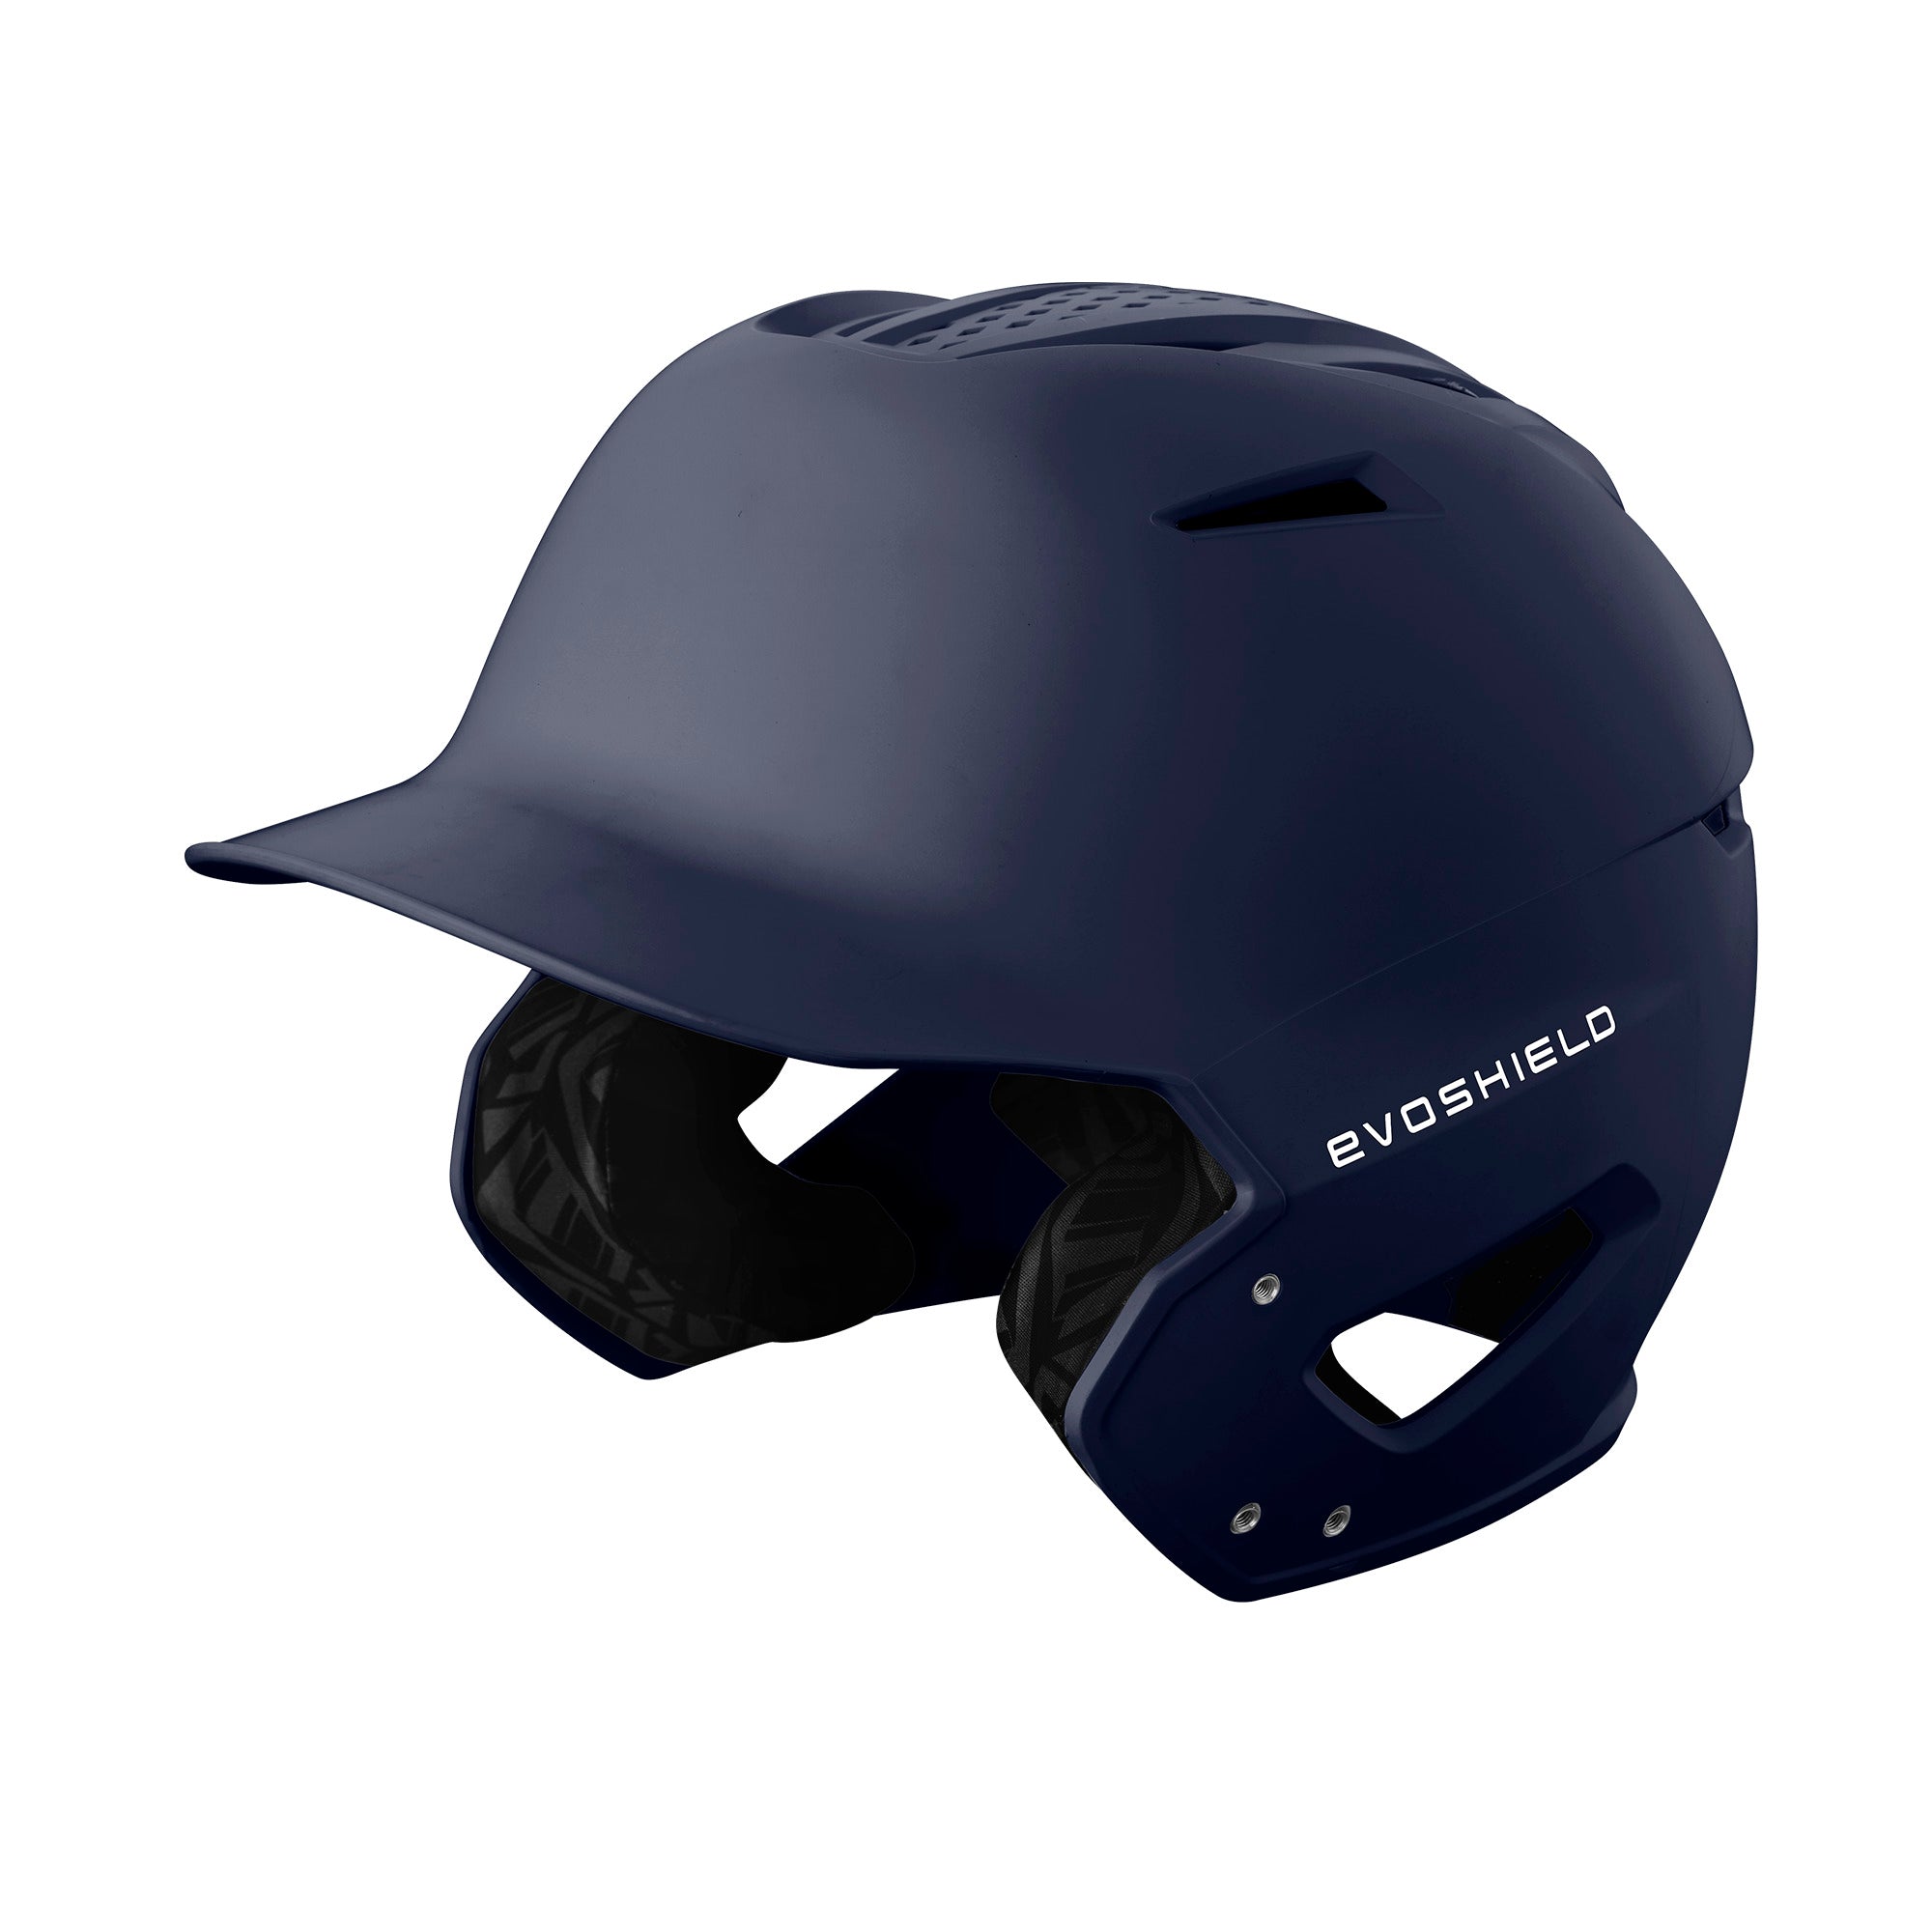 Evoshield XVT 2.0 Matte Batting Helmet Navy